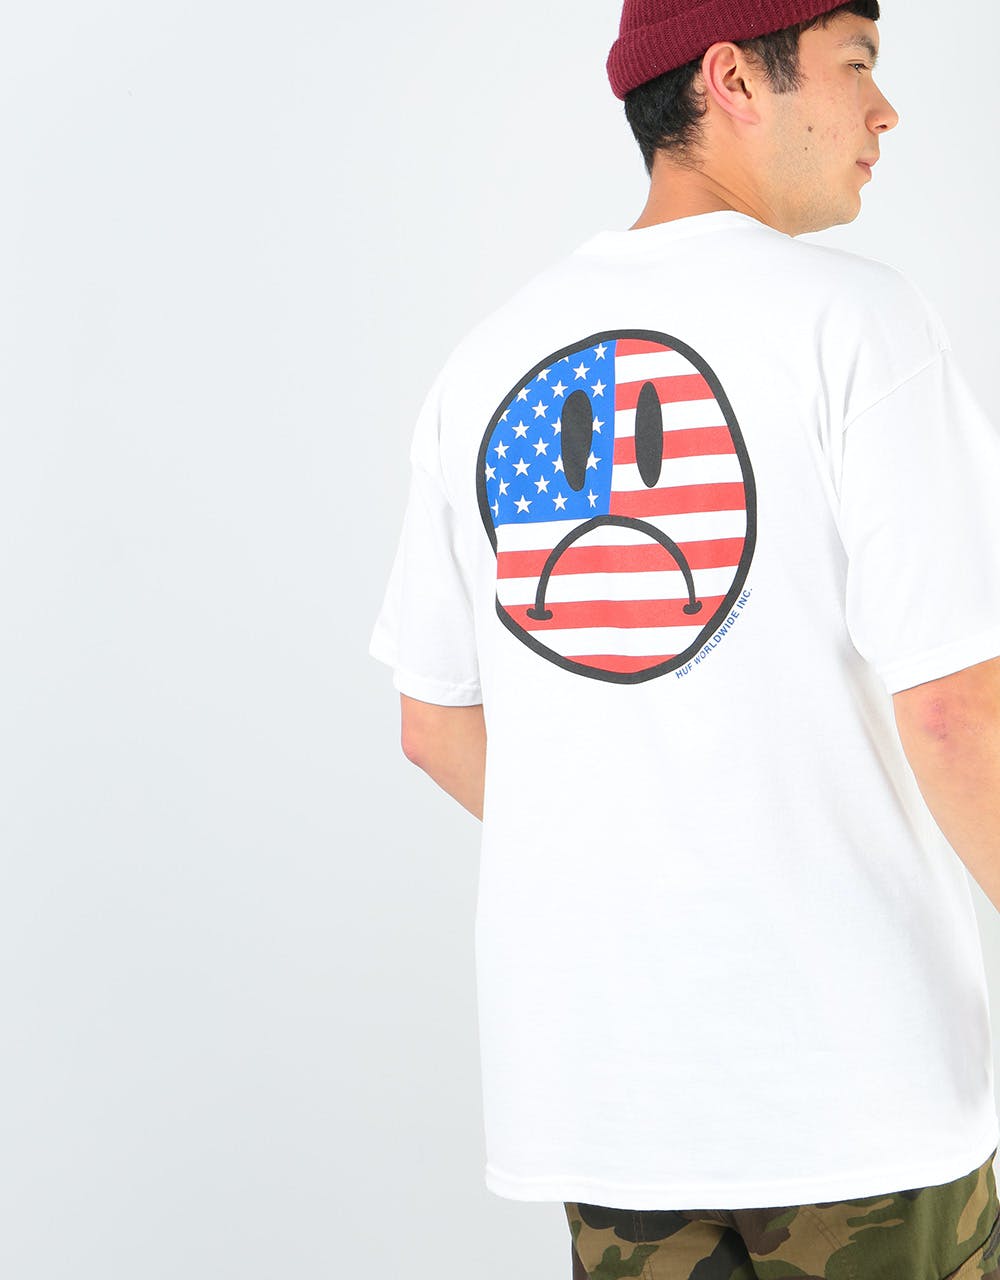 HUF Bummer USA T-Shirt - White